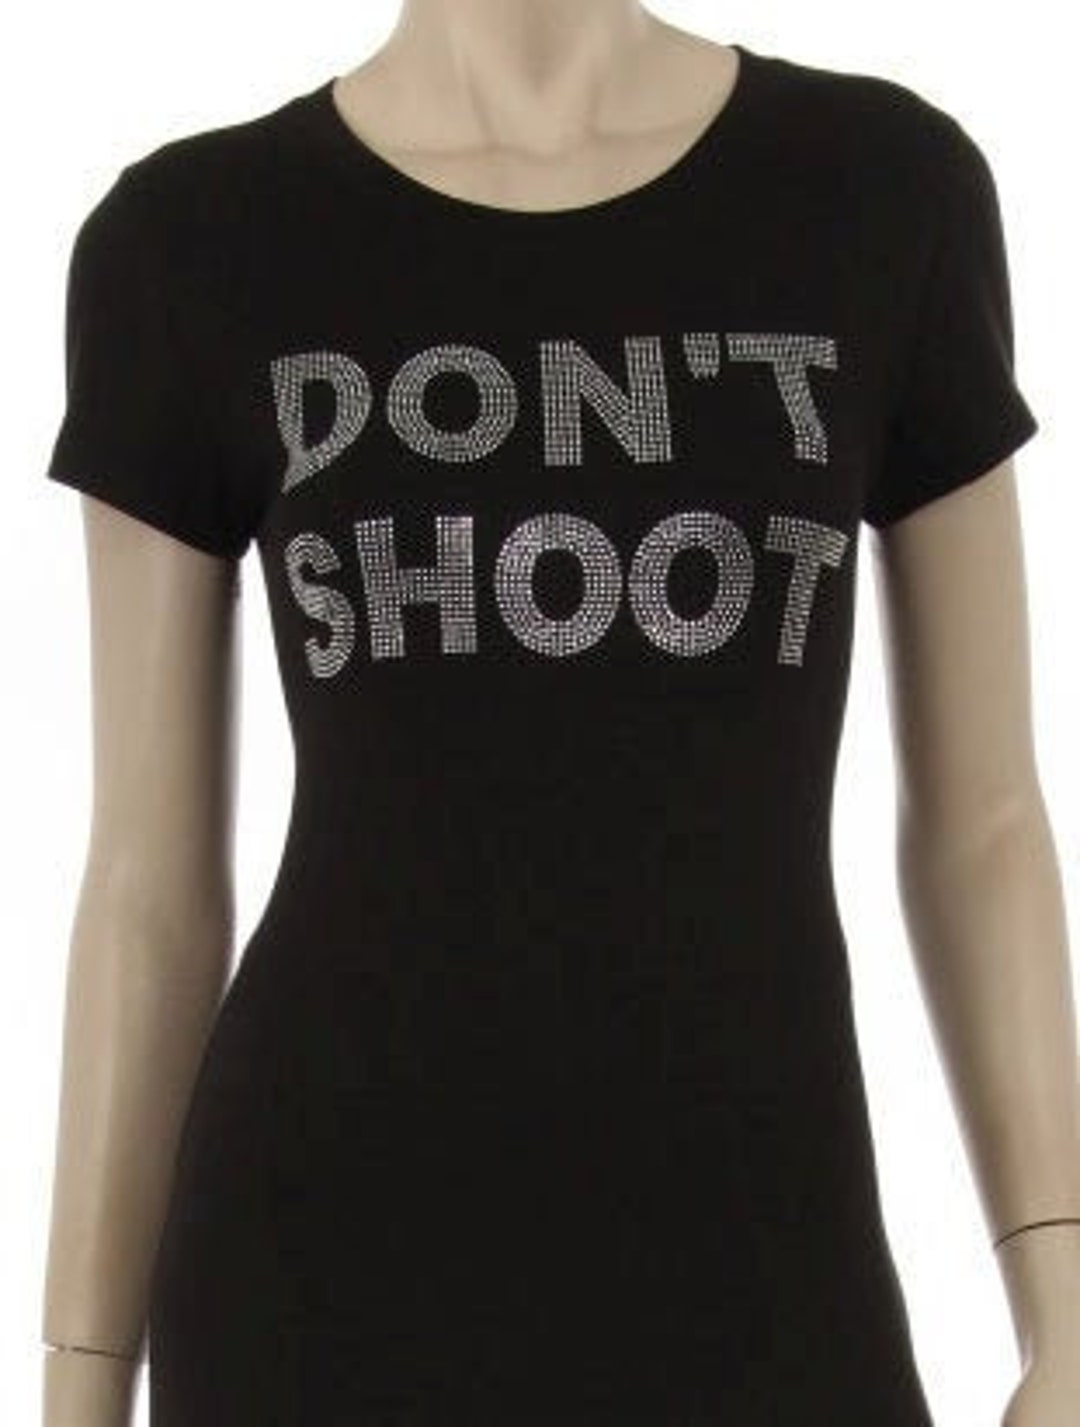 Don't Shoot & Hands up Rhinestone Iron on Shirt - Etsy